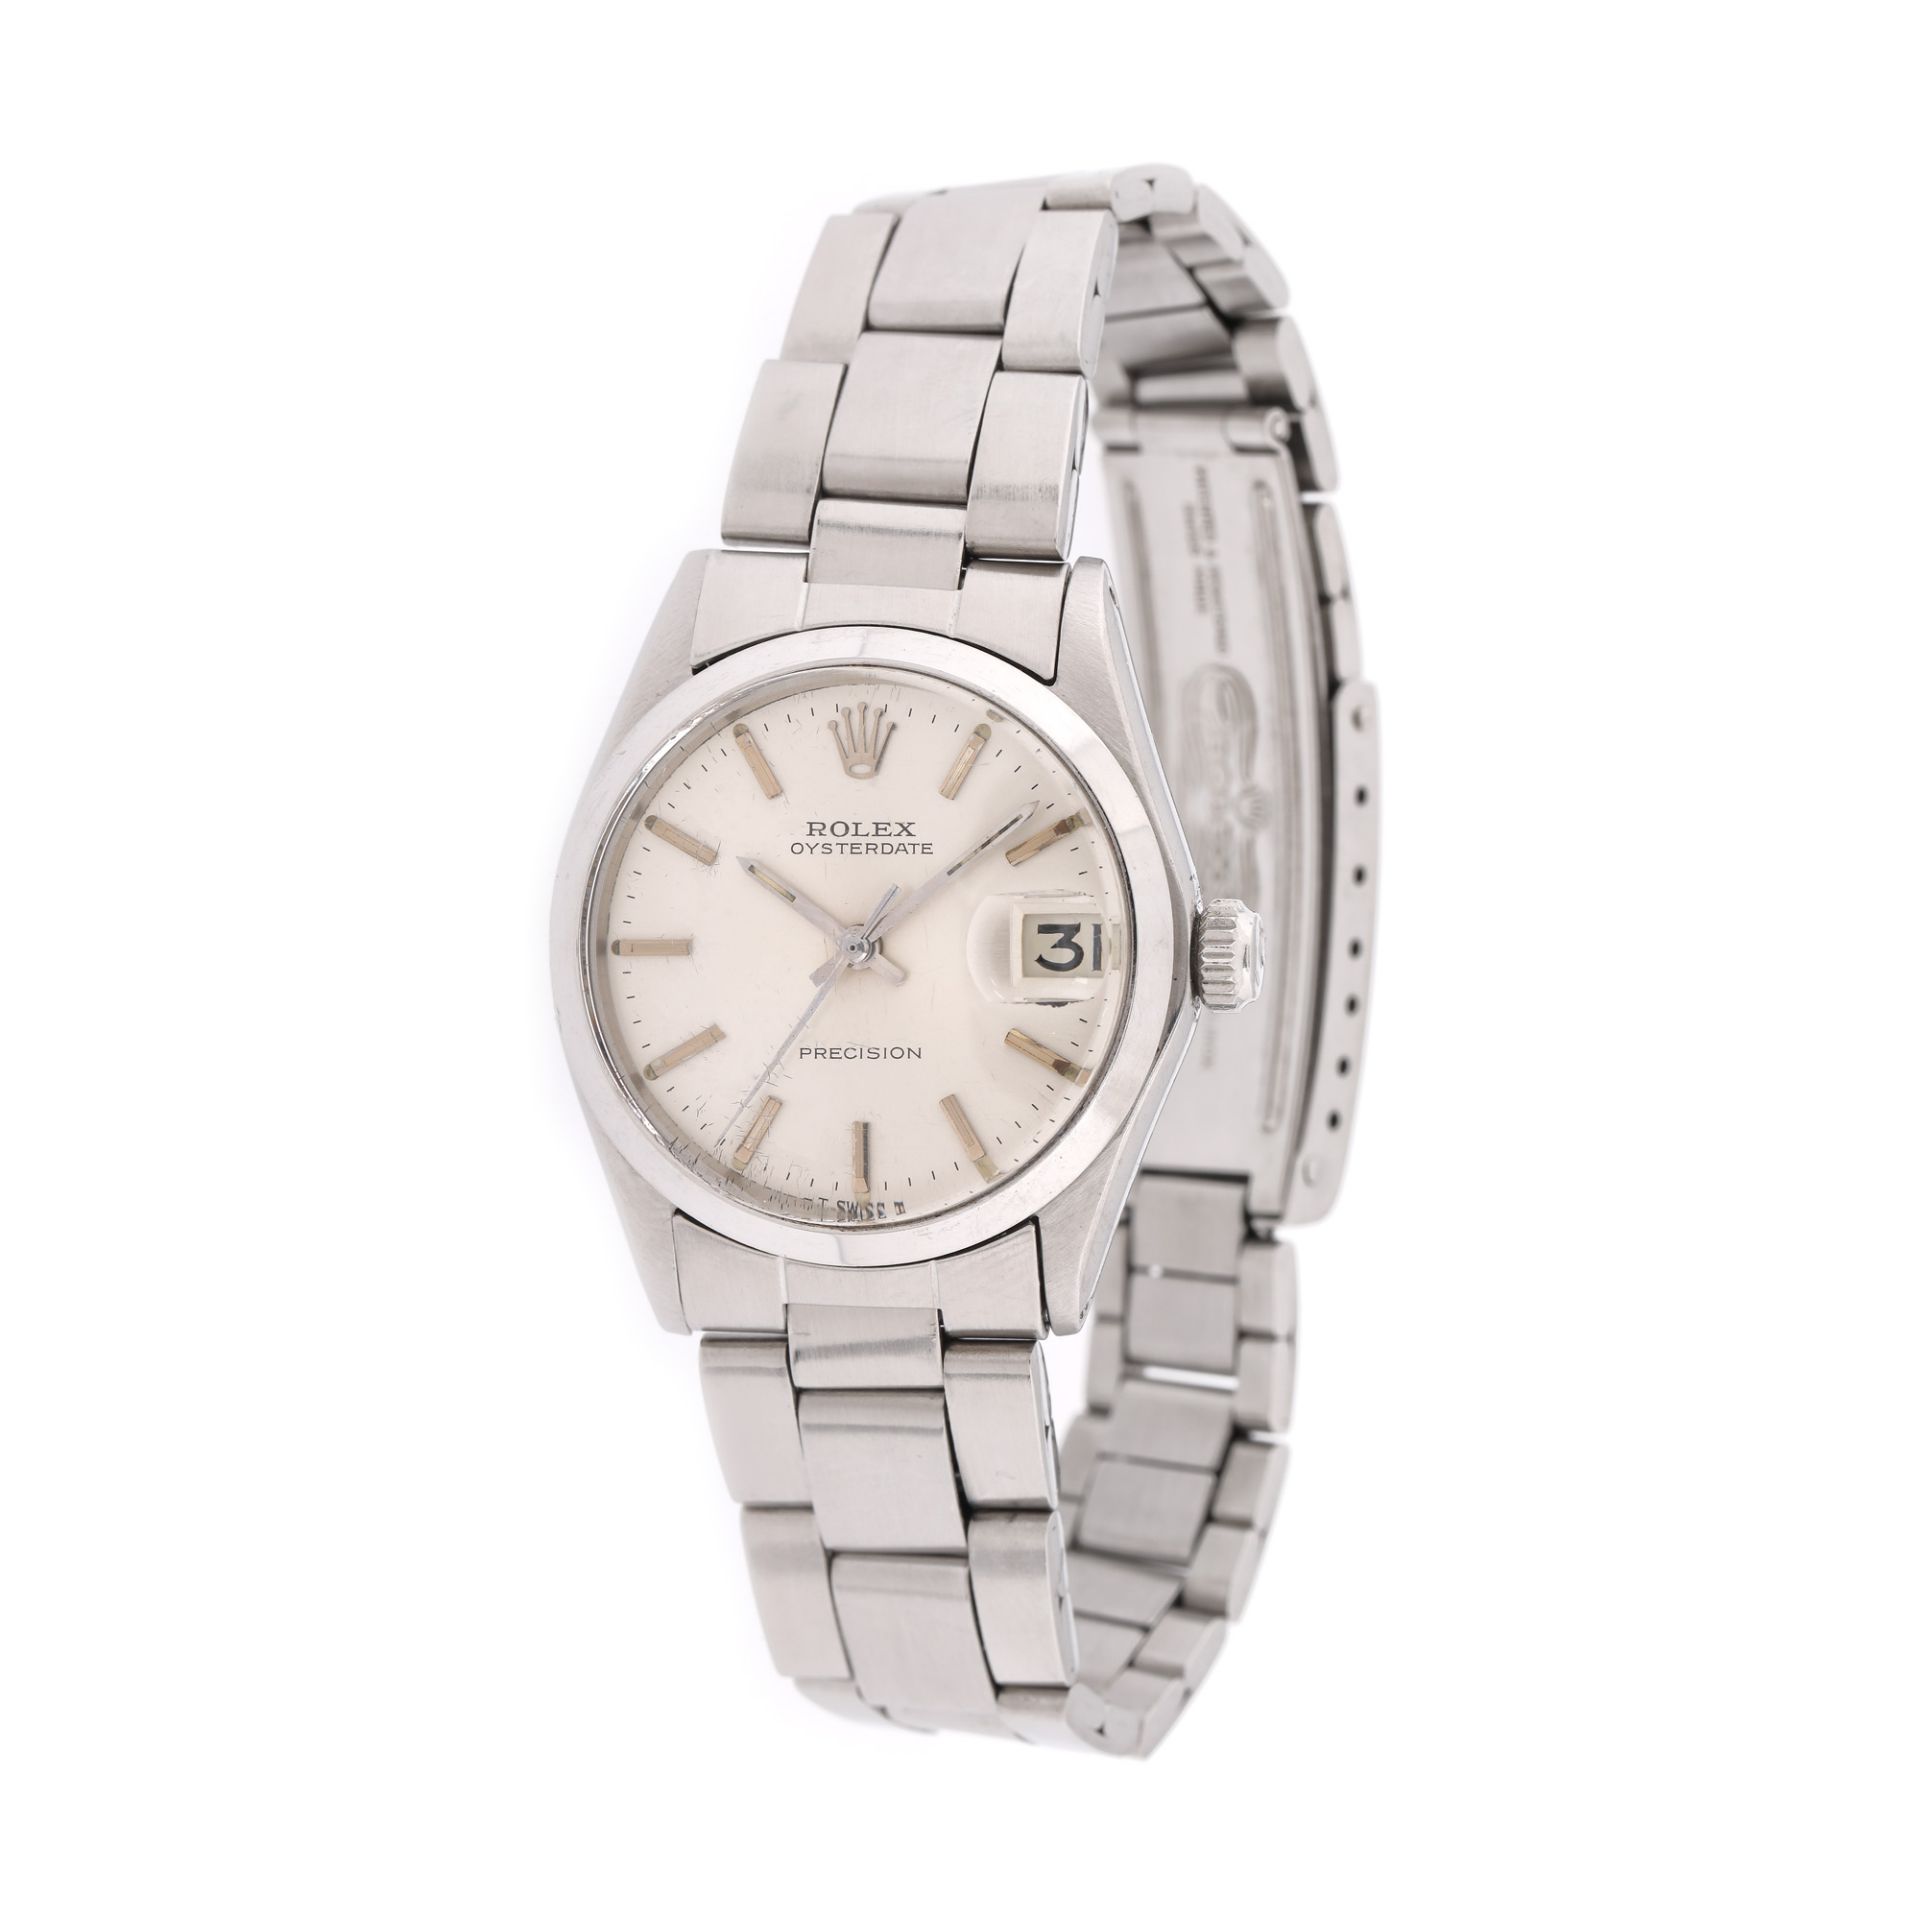 Rolex Oyster Precision wristwatch, women